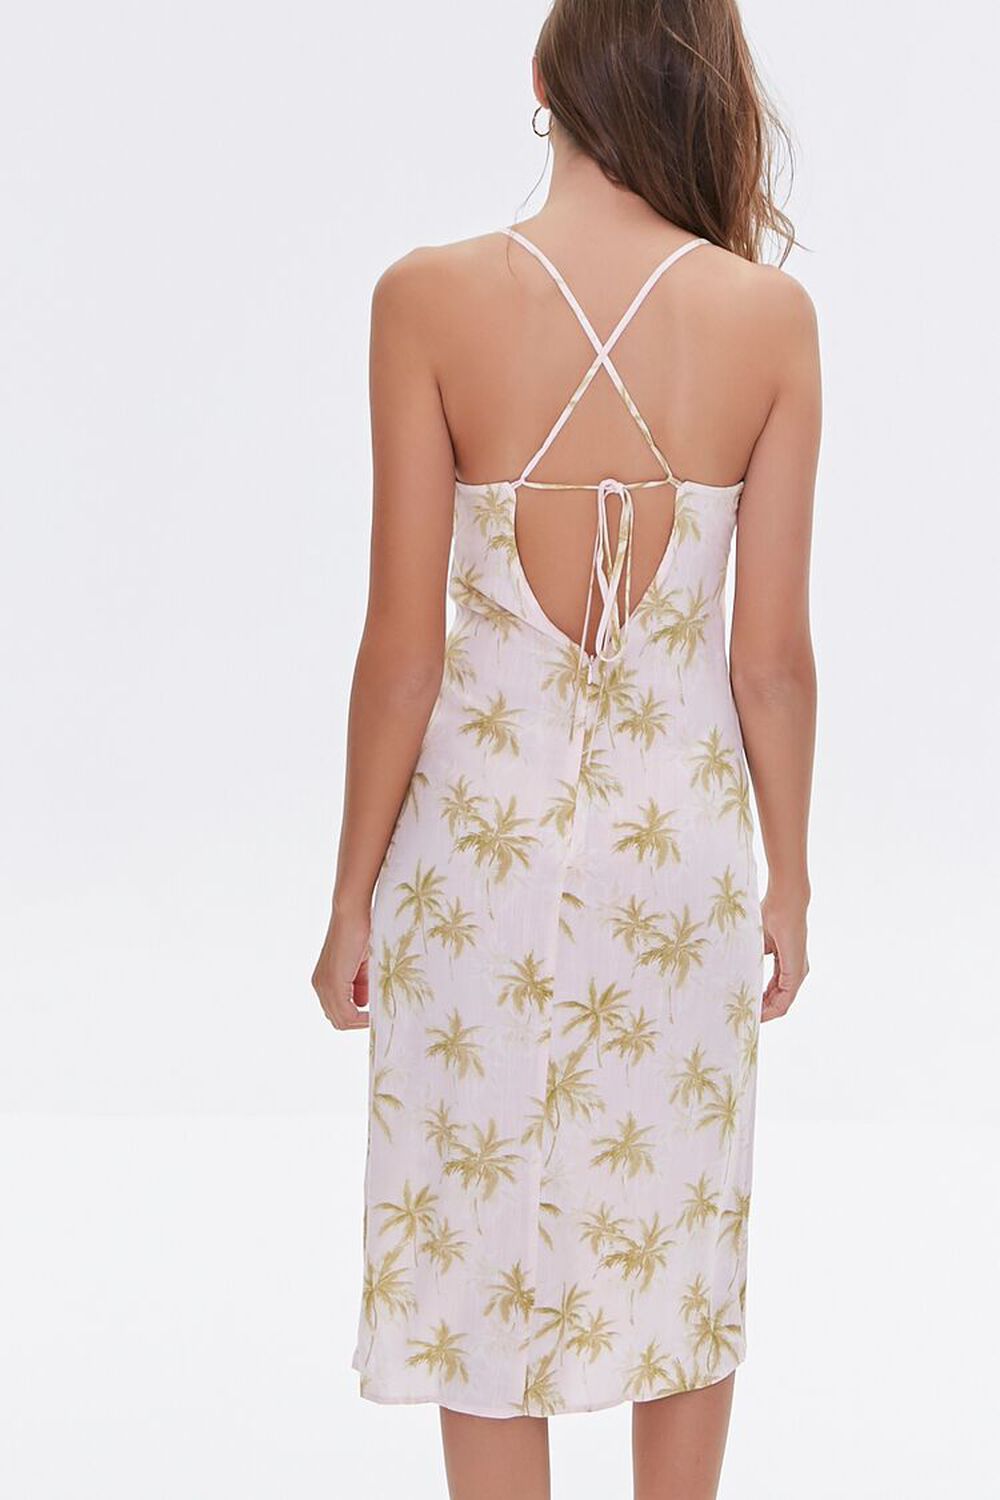 Palm Tree Print Dress, image 3